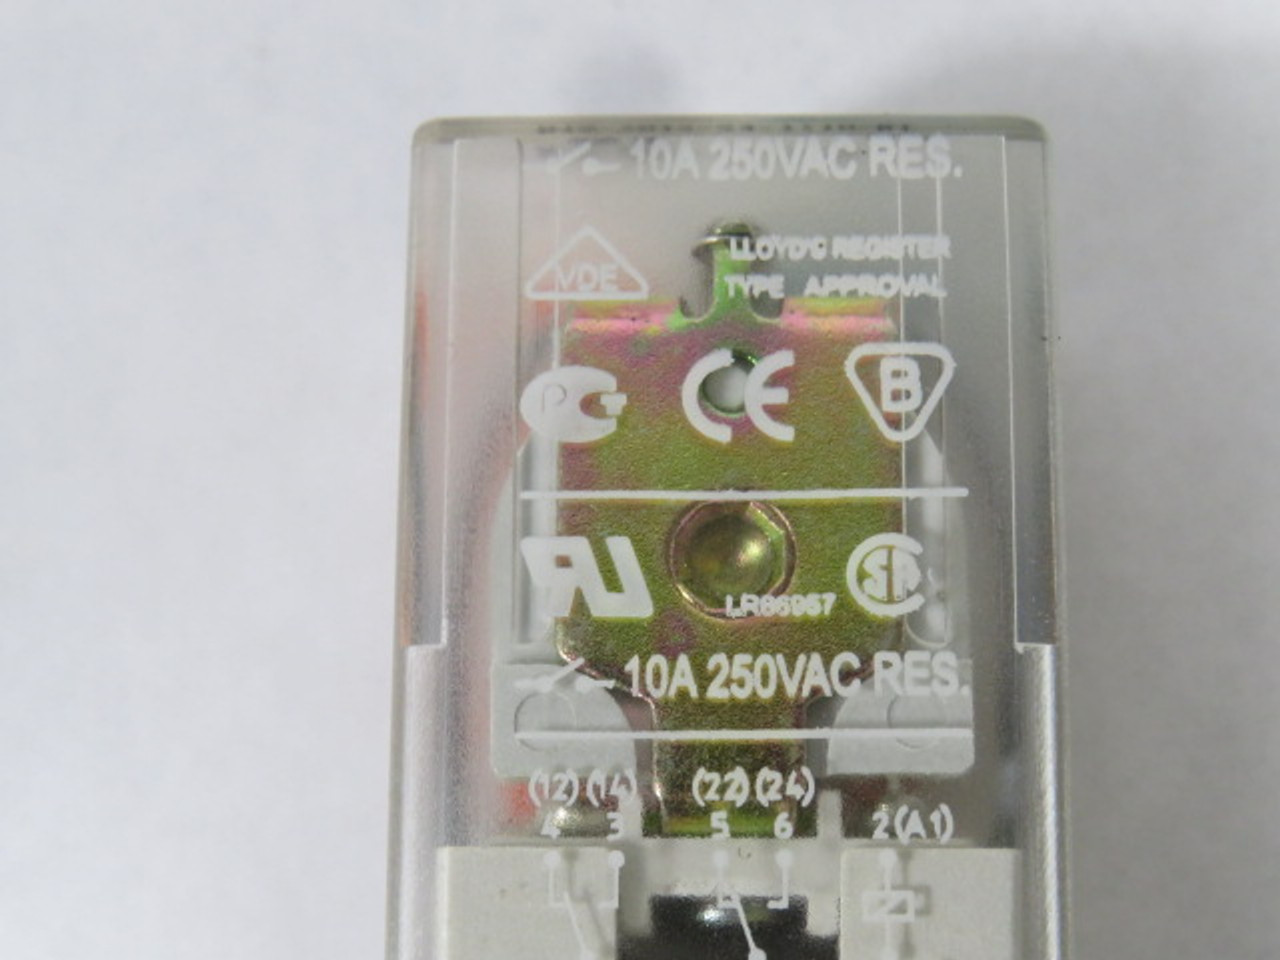 Relpol R15-2012-23-1110-WT Plug-In Relay 110Vdc 10A 8 Pin DPDT USED